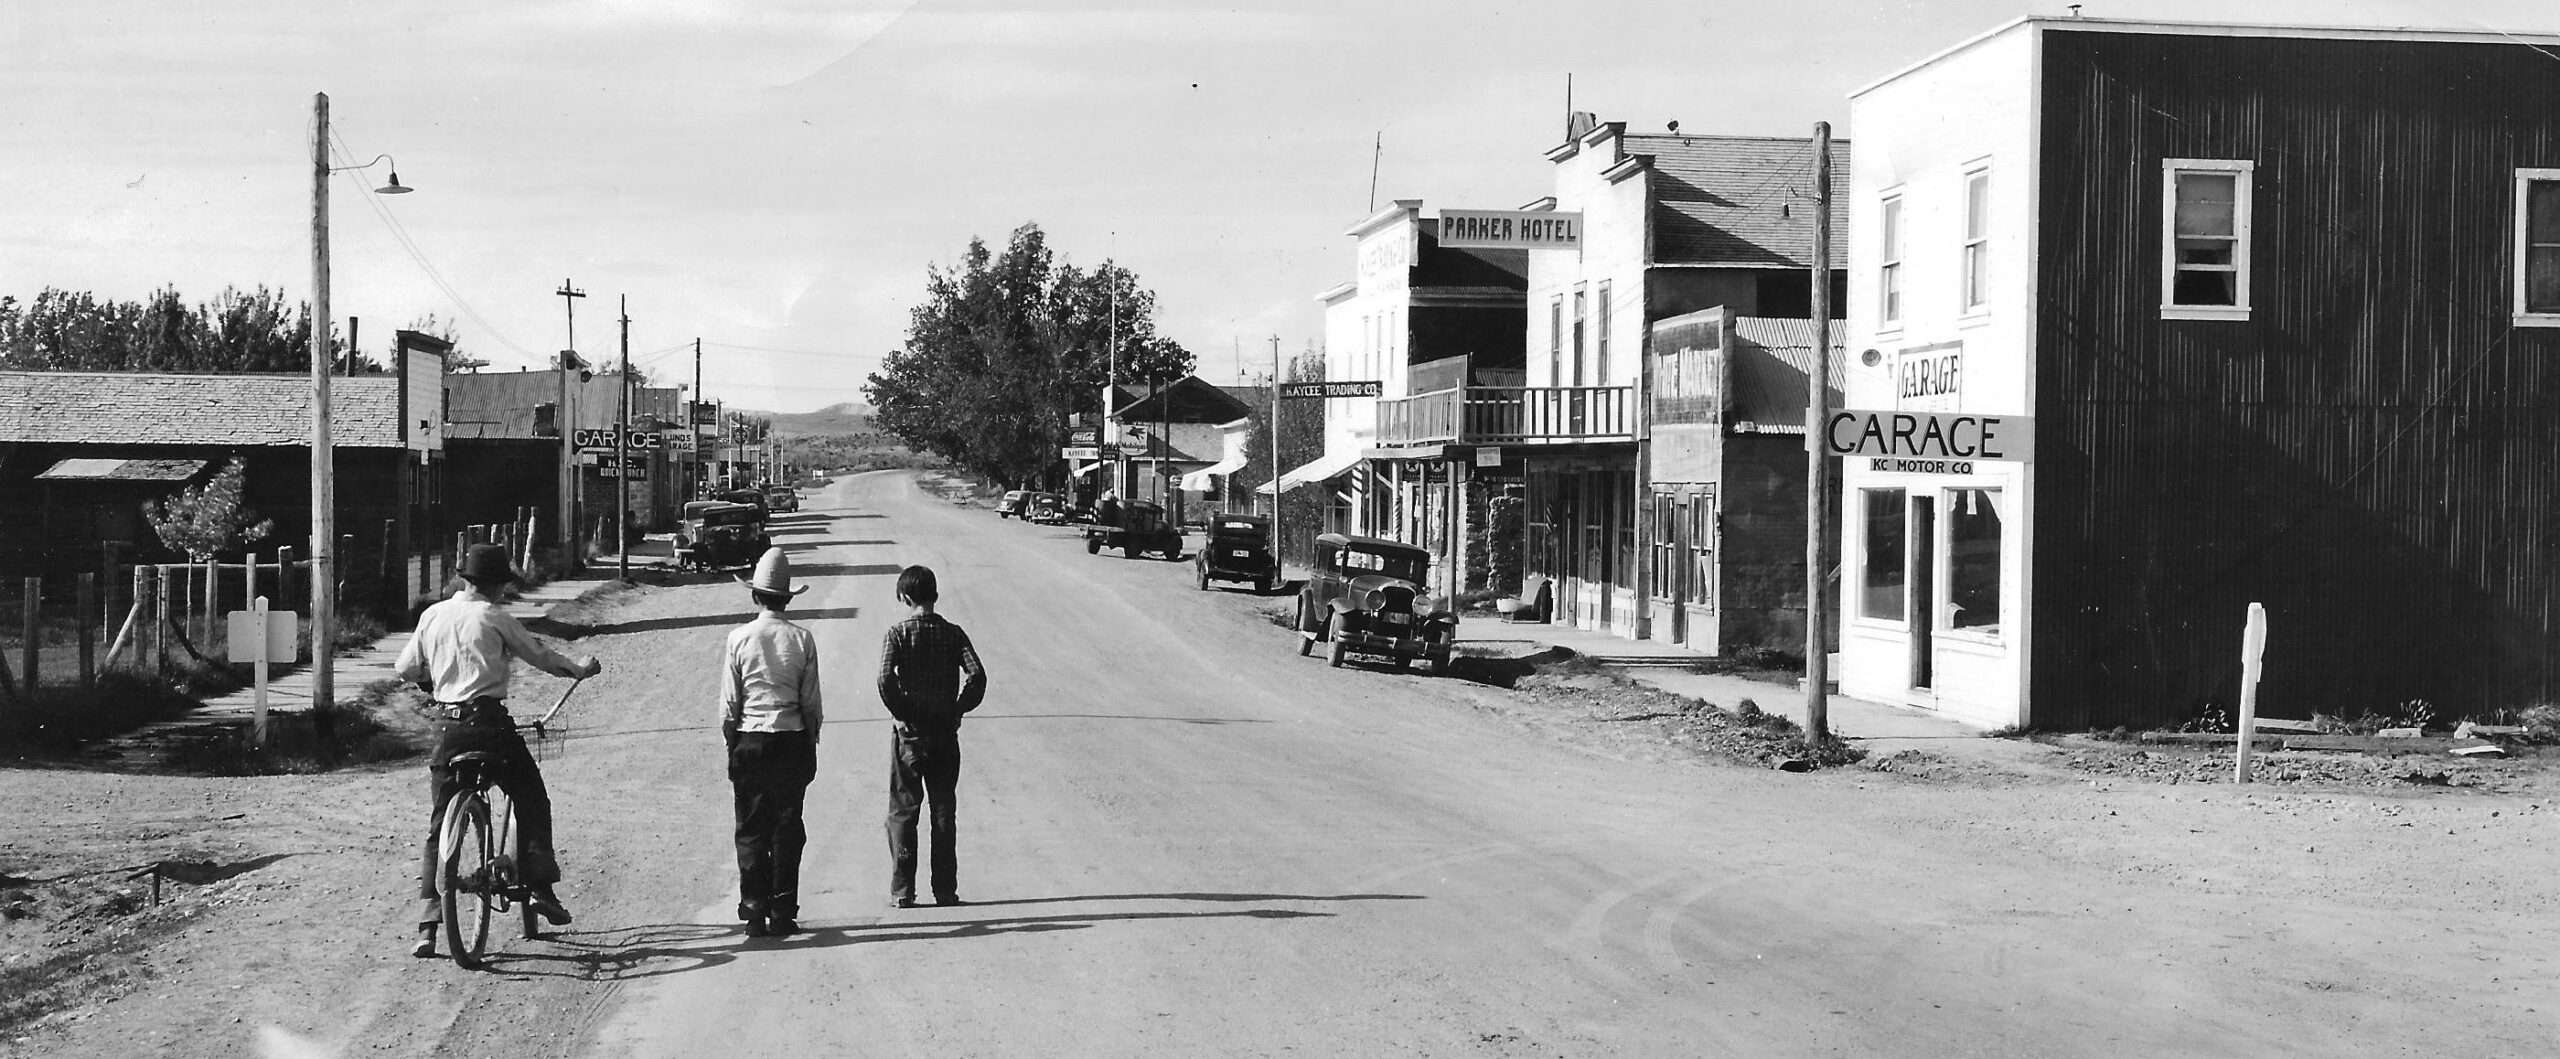 The History of Kaycee, Wyoming